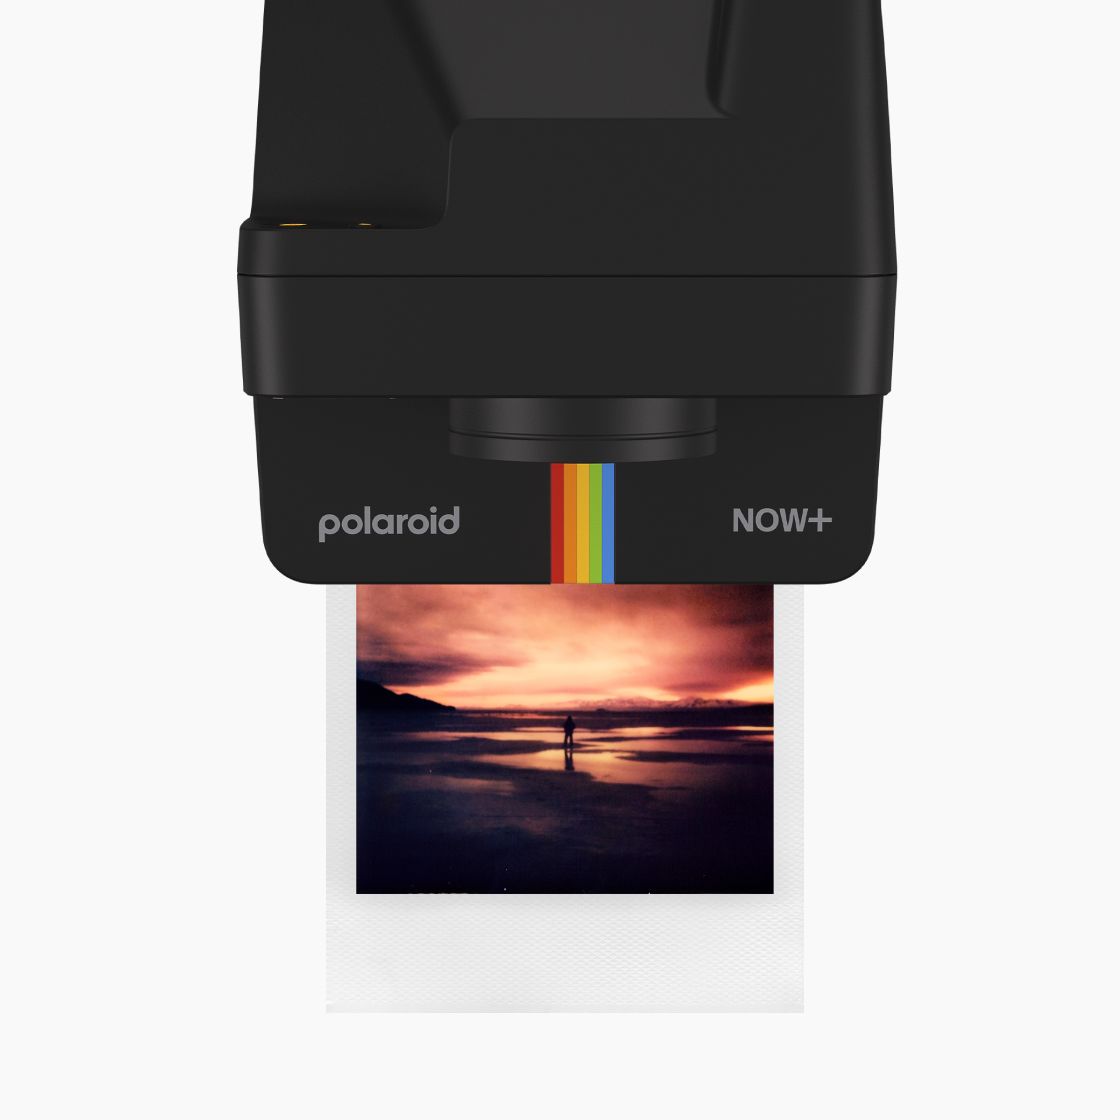 Polaroid Go - Mini cámara instantánea, color negro (9070), solo compatible  con Polaroid Go Film